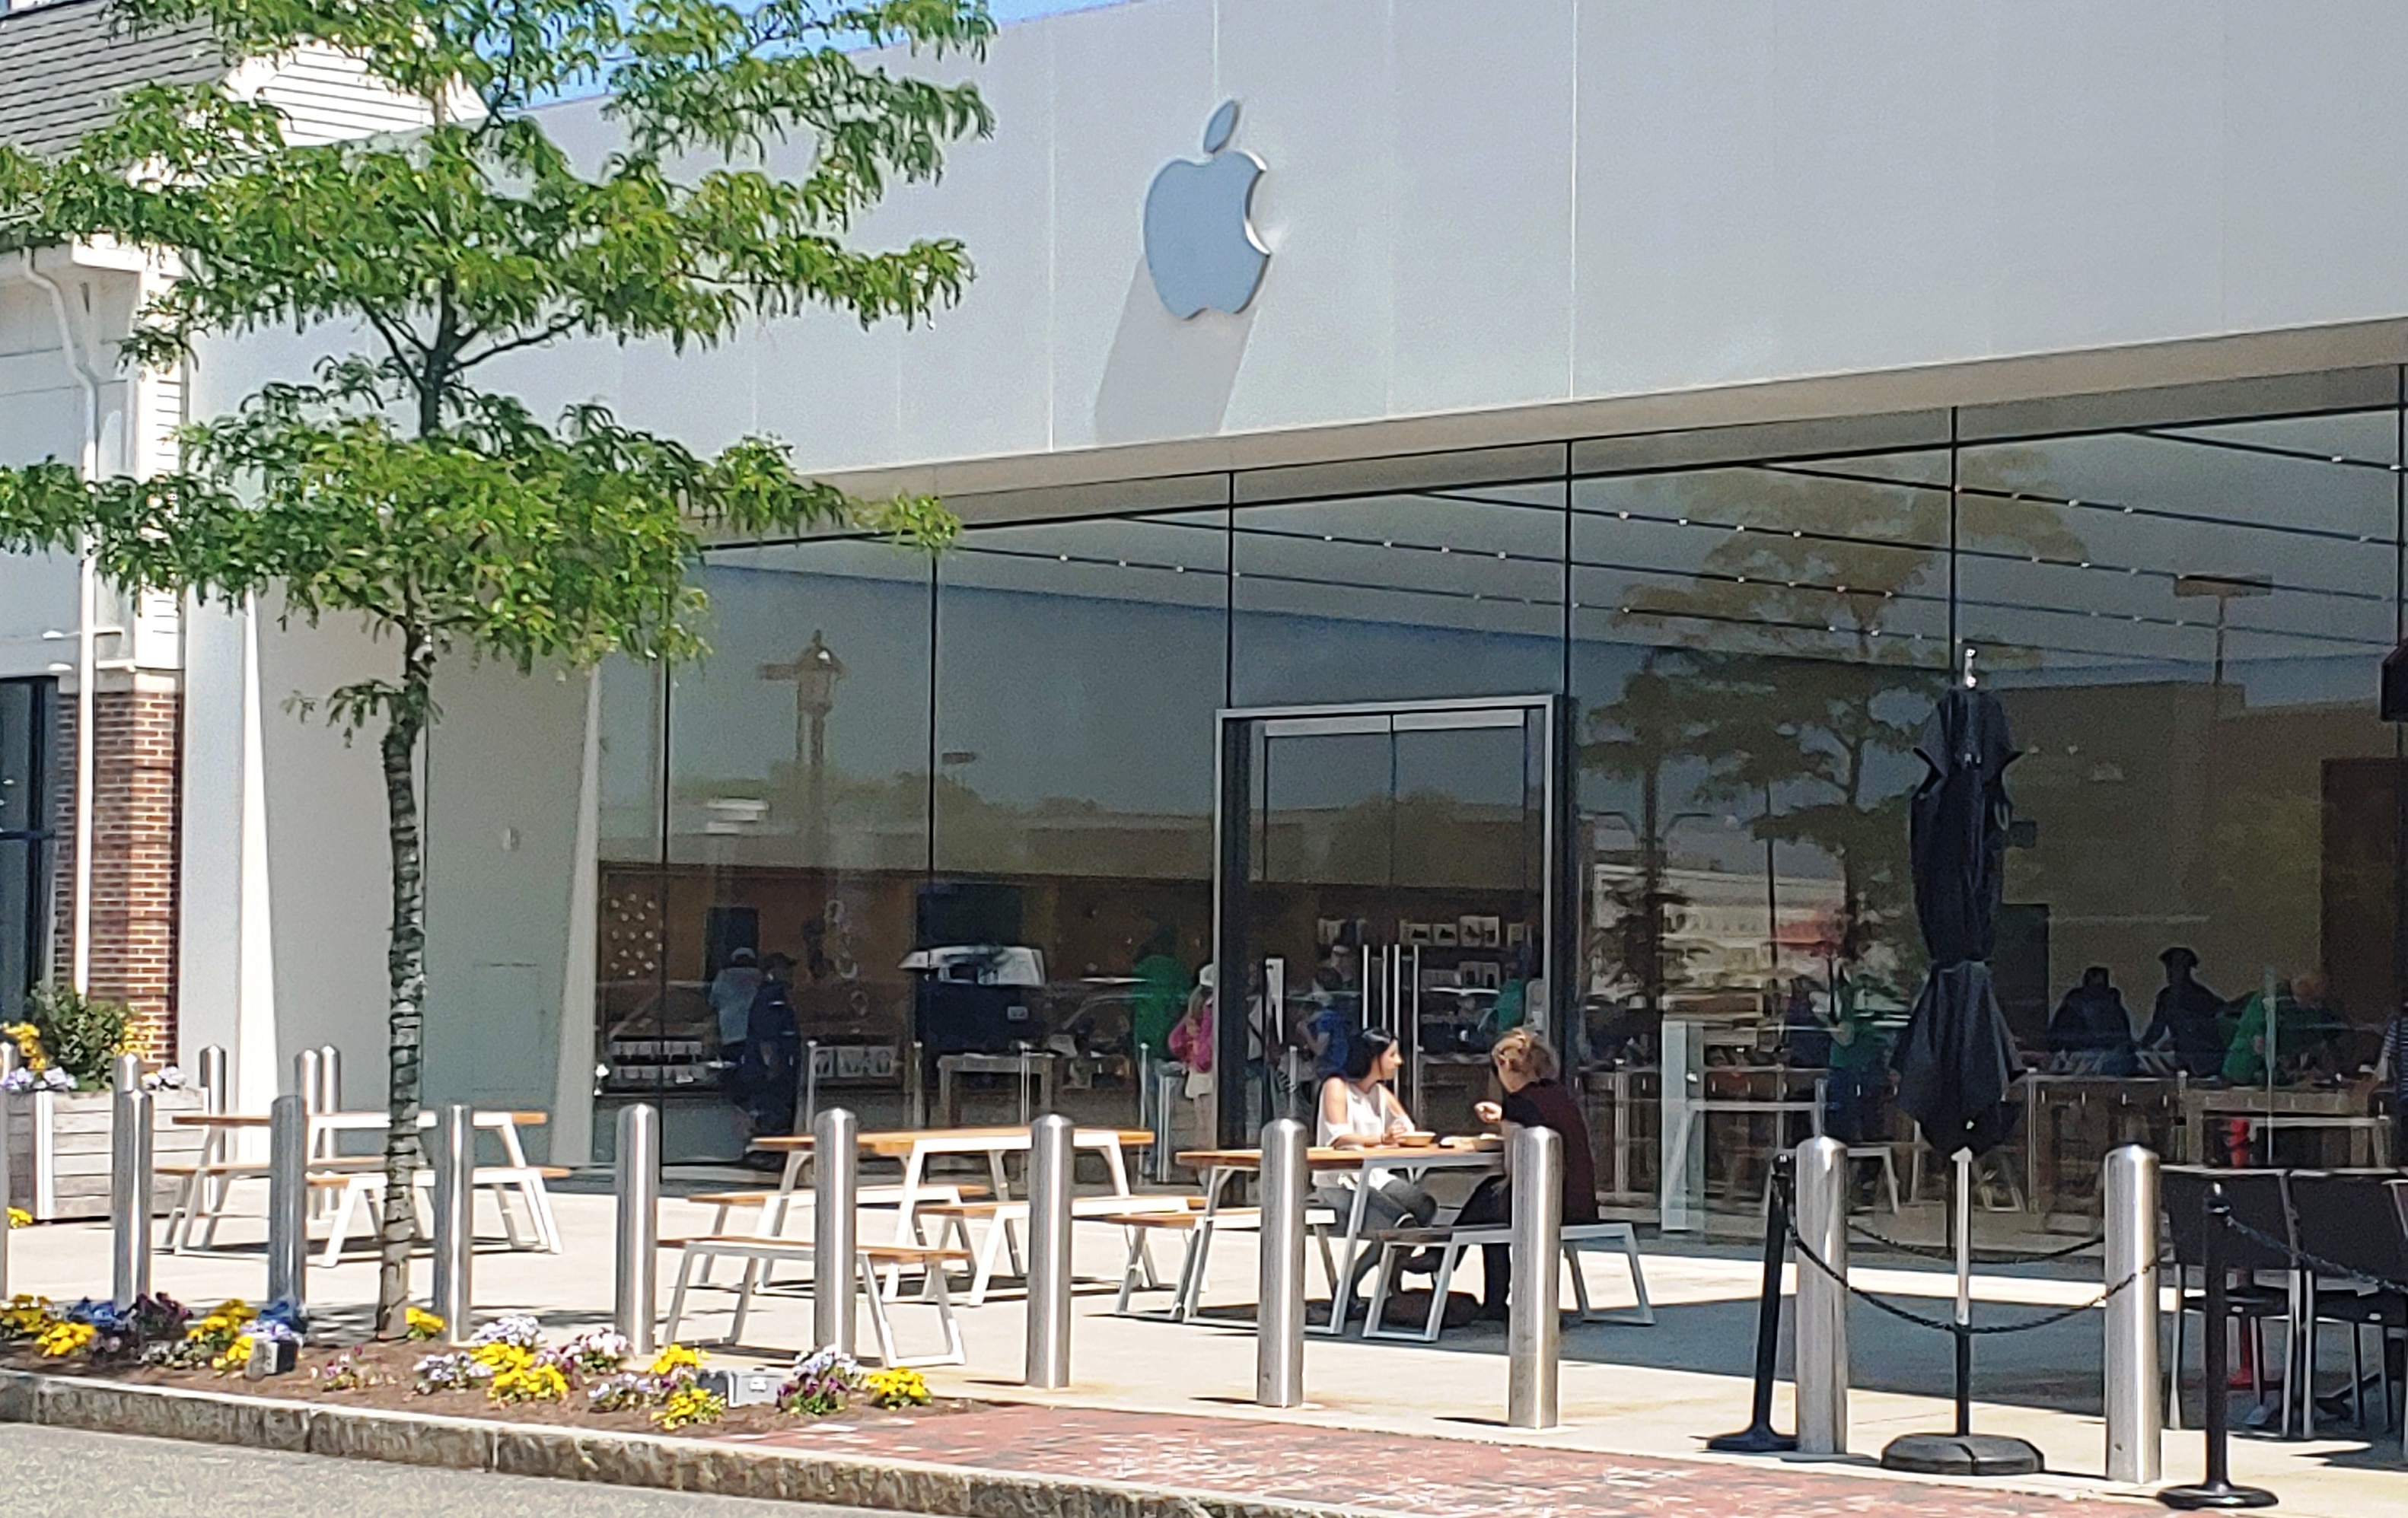 Apple Store Hingham, MA